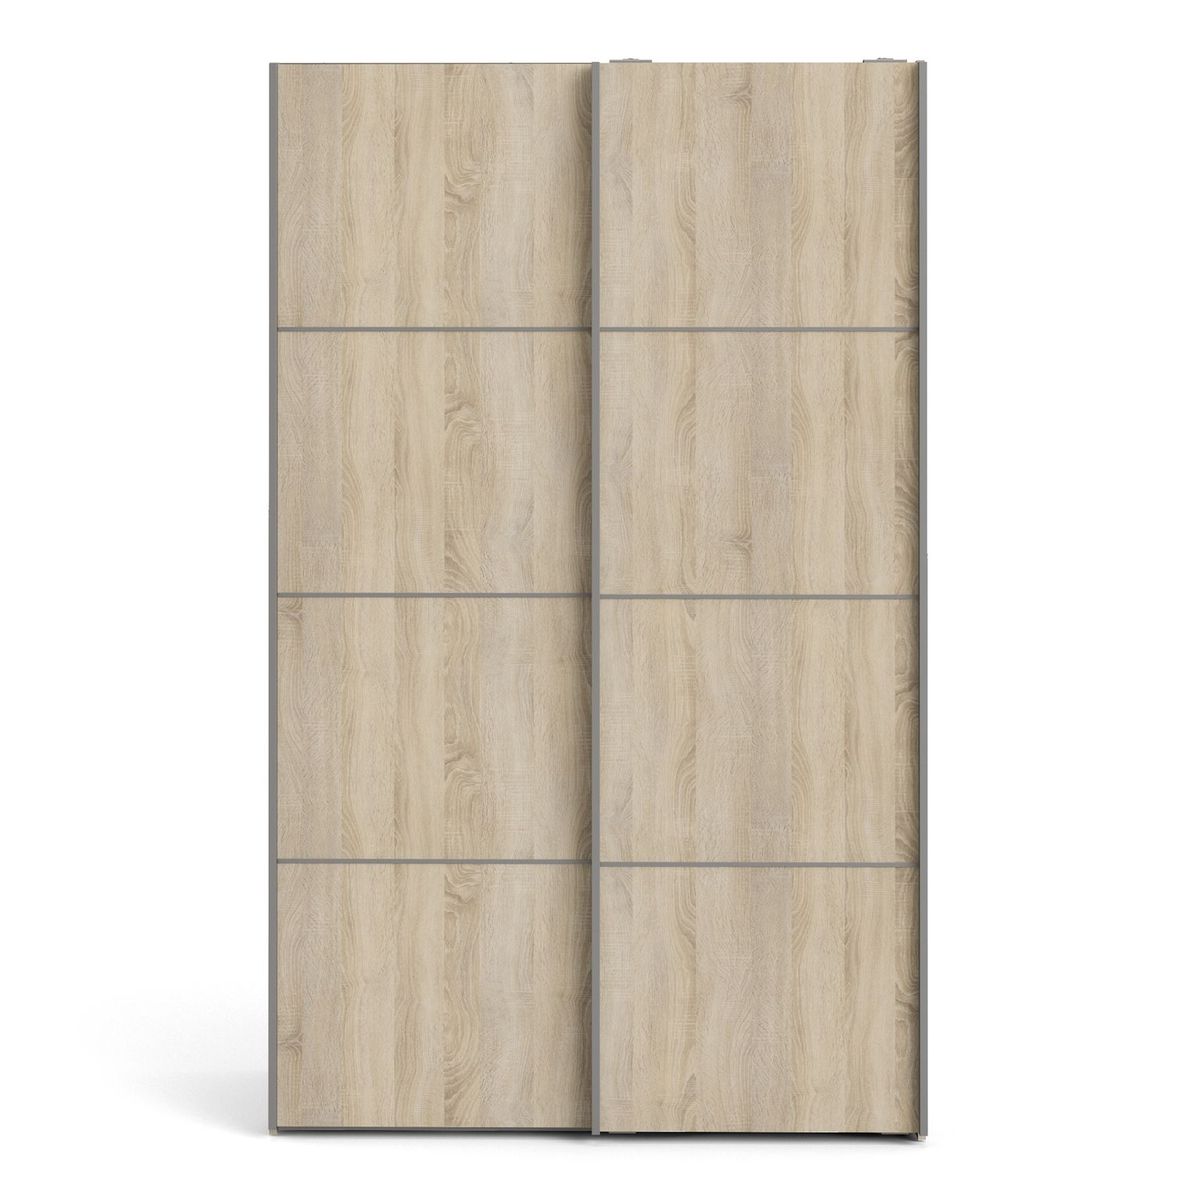 Verona Sliding Wardrobe 120cm In Oak With White Doors With 2 Shelves